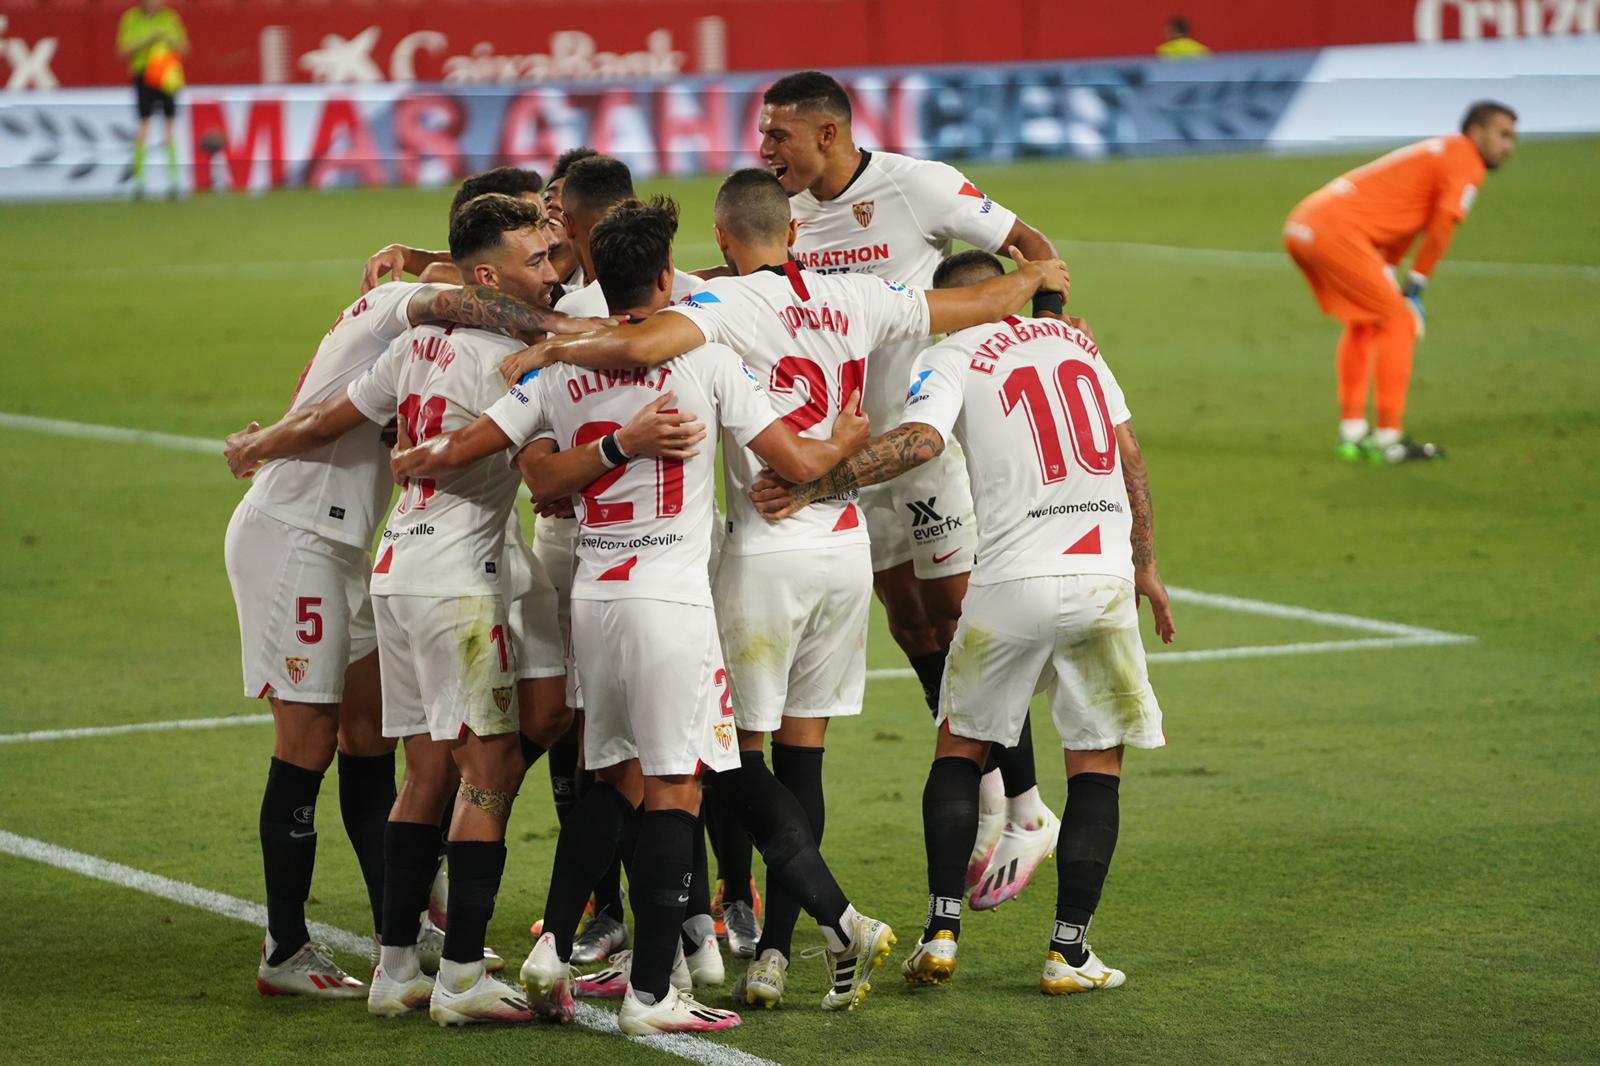 Celebrating a goal against Mallorca